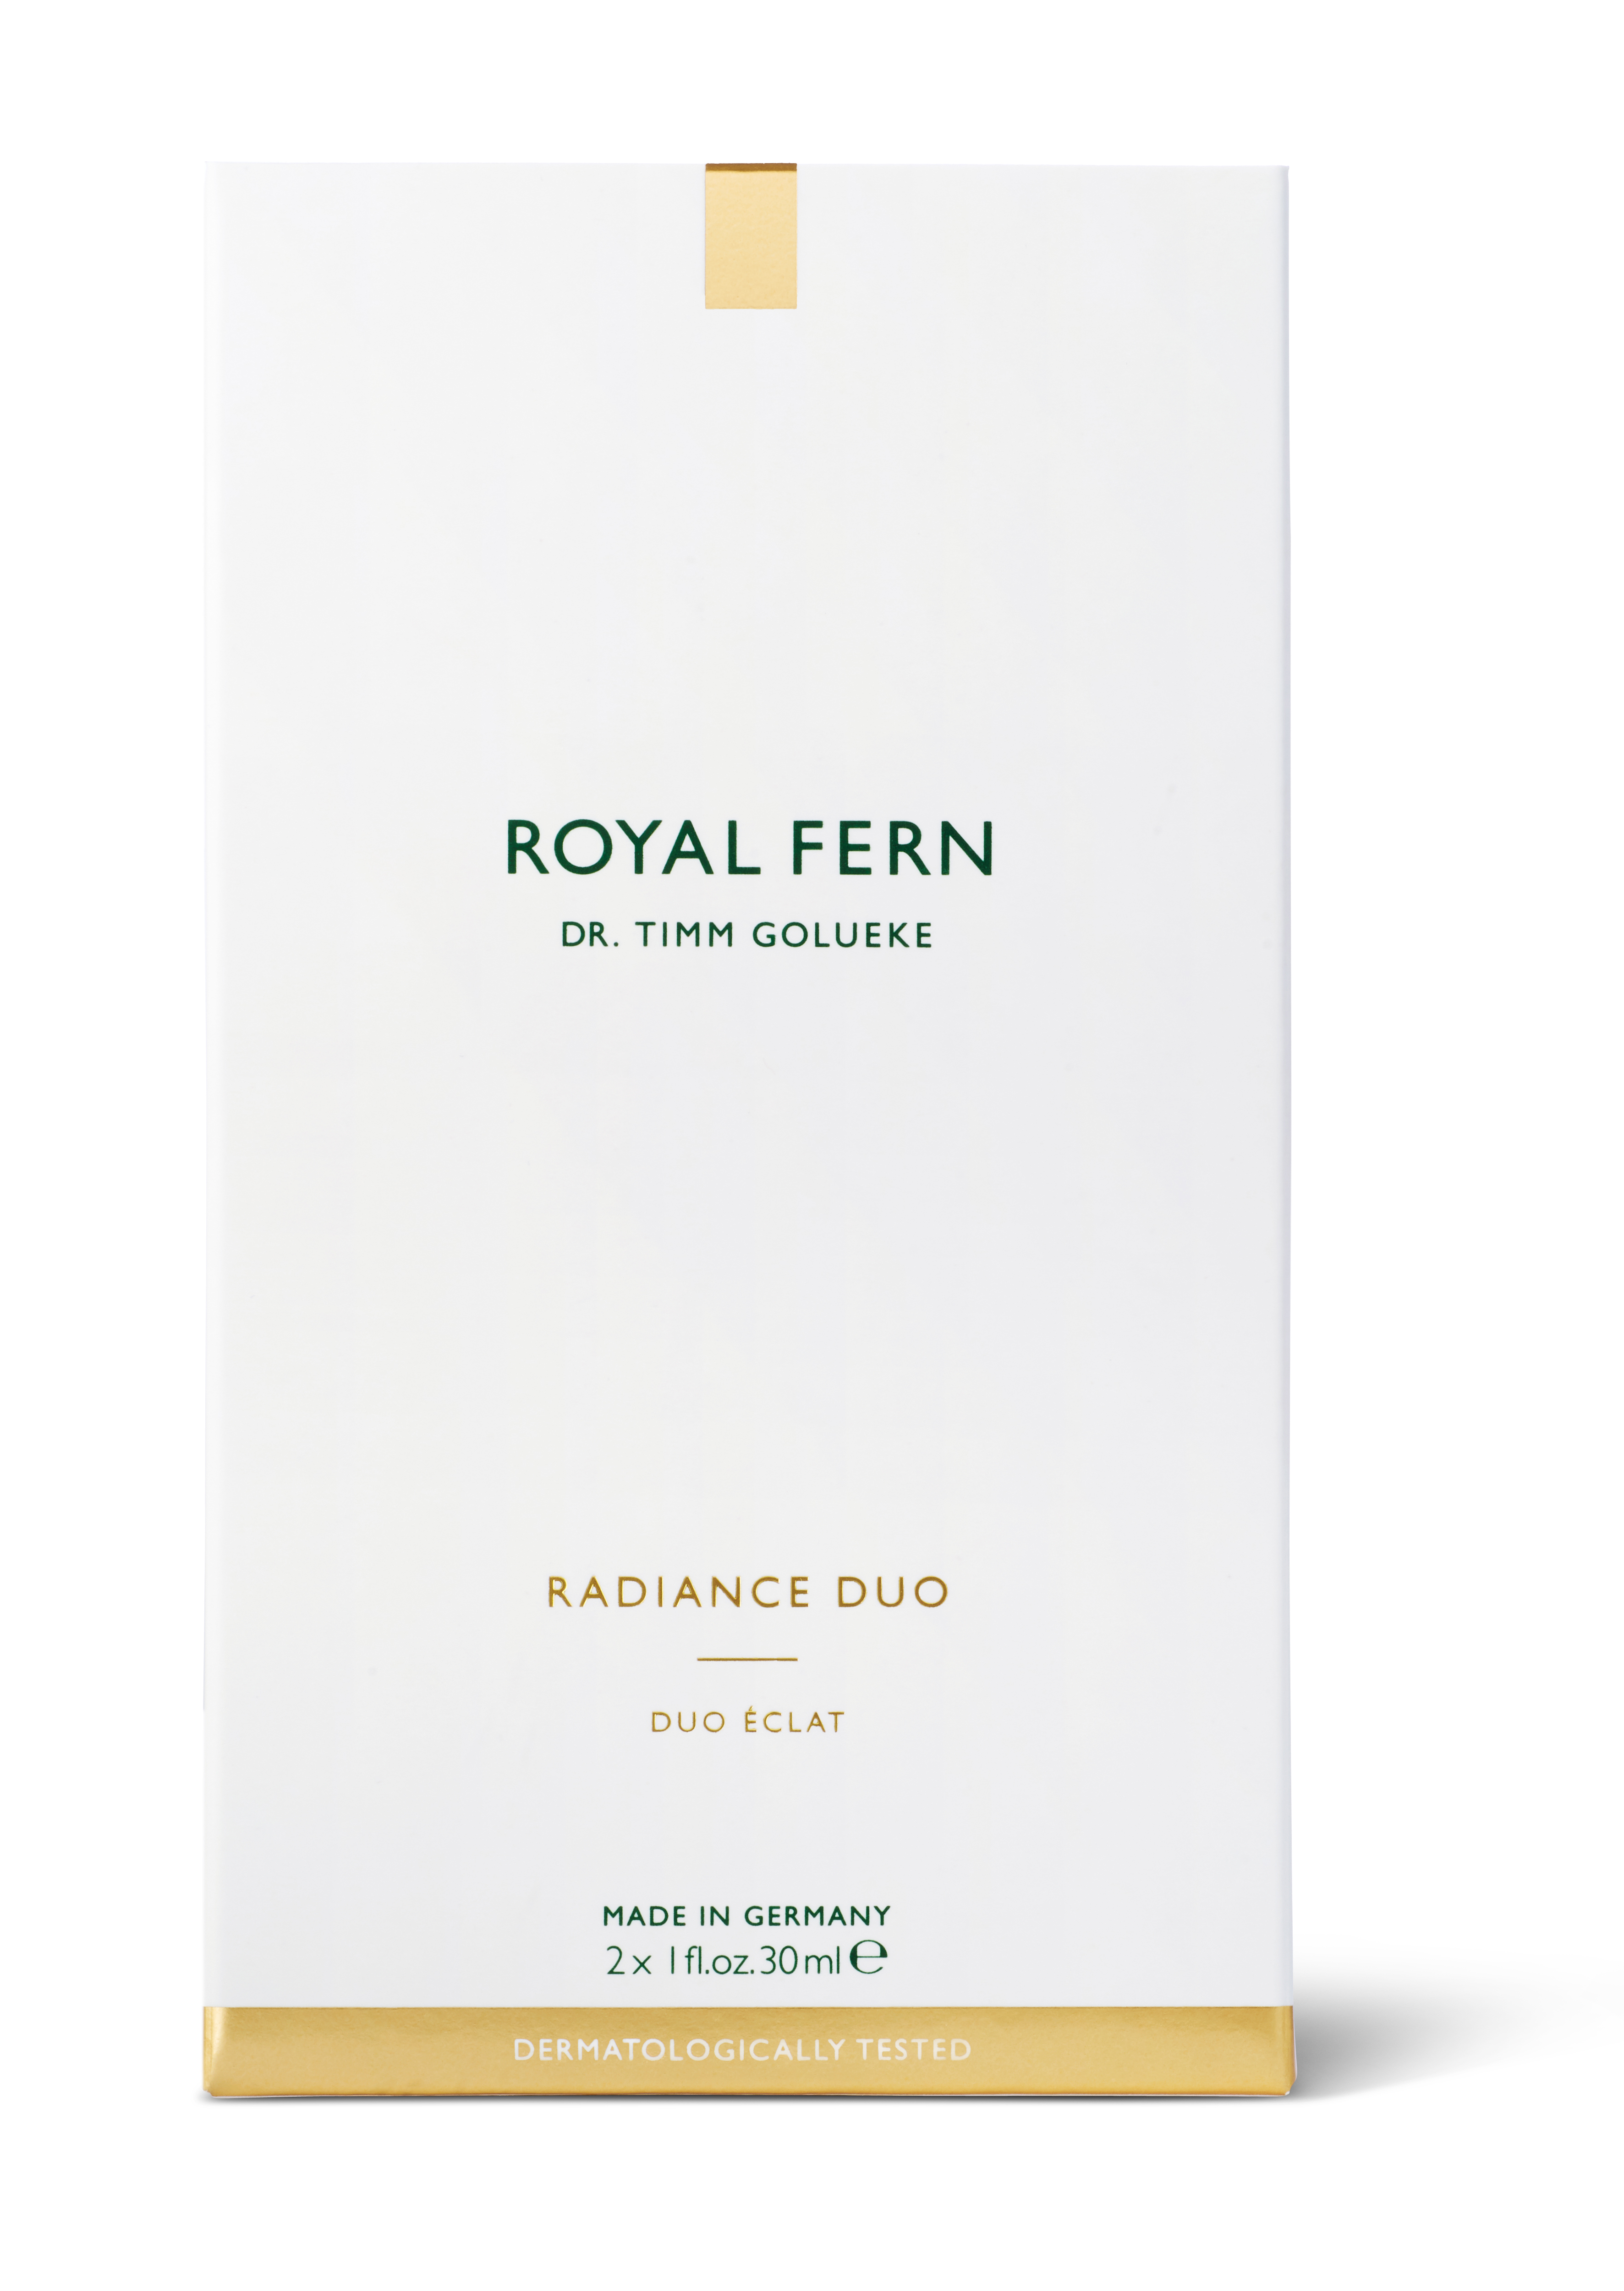 Royal Fern Range new packaging